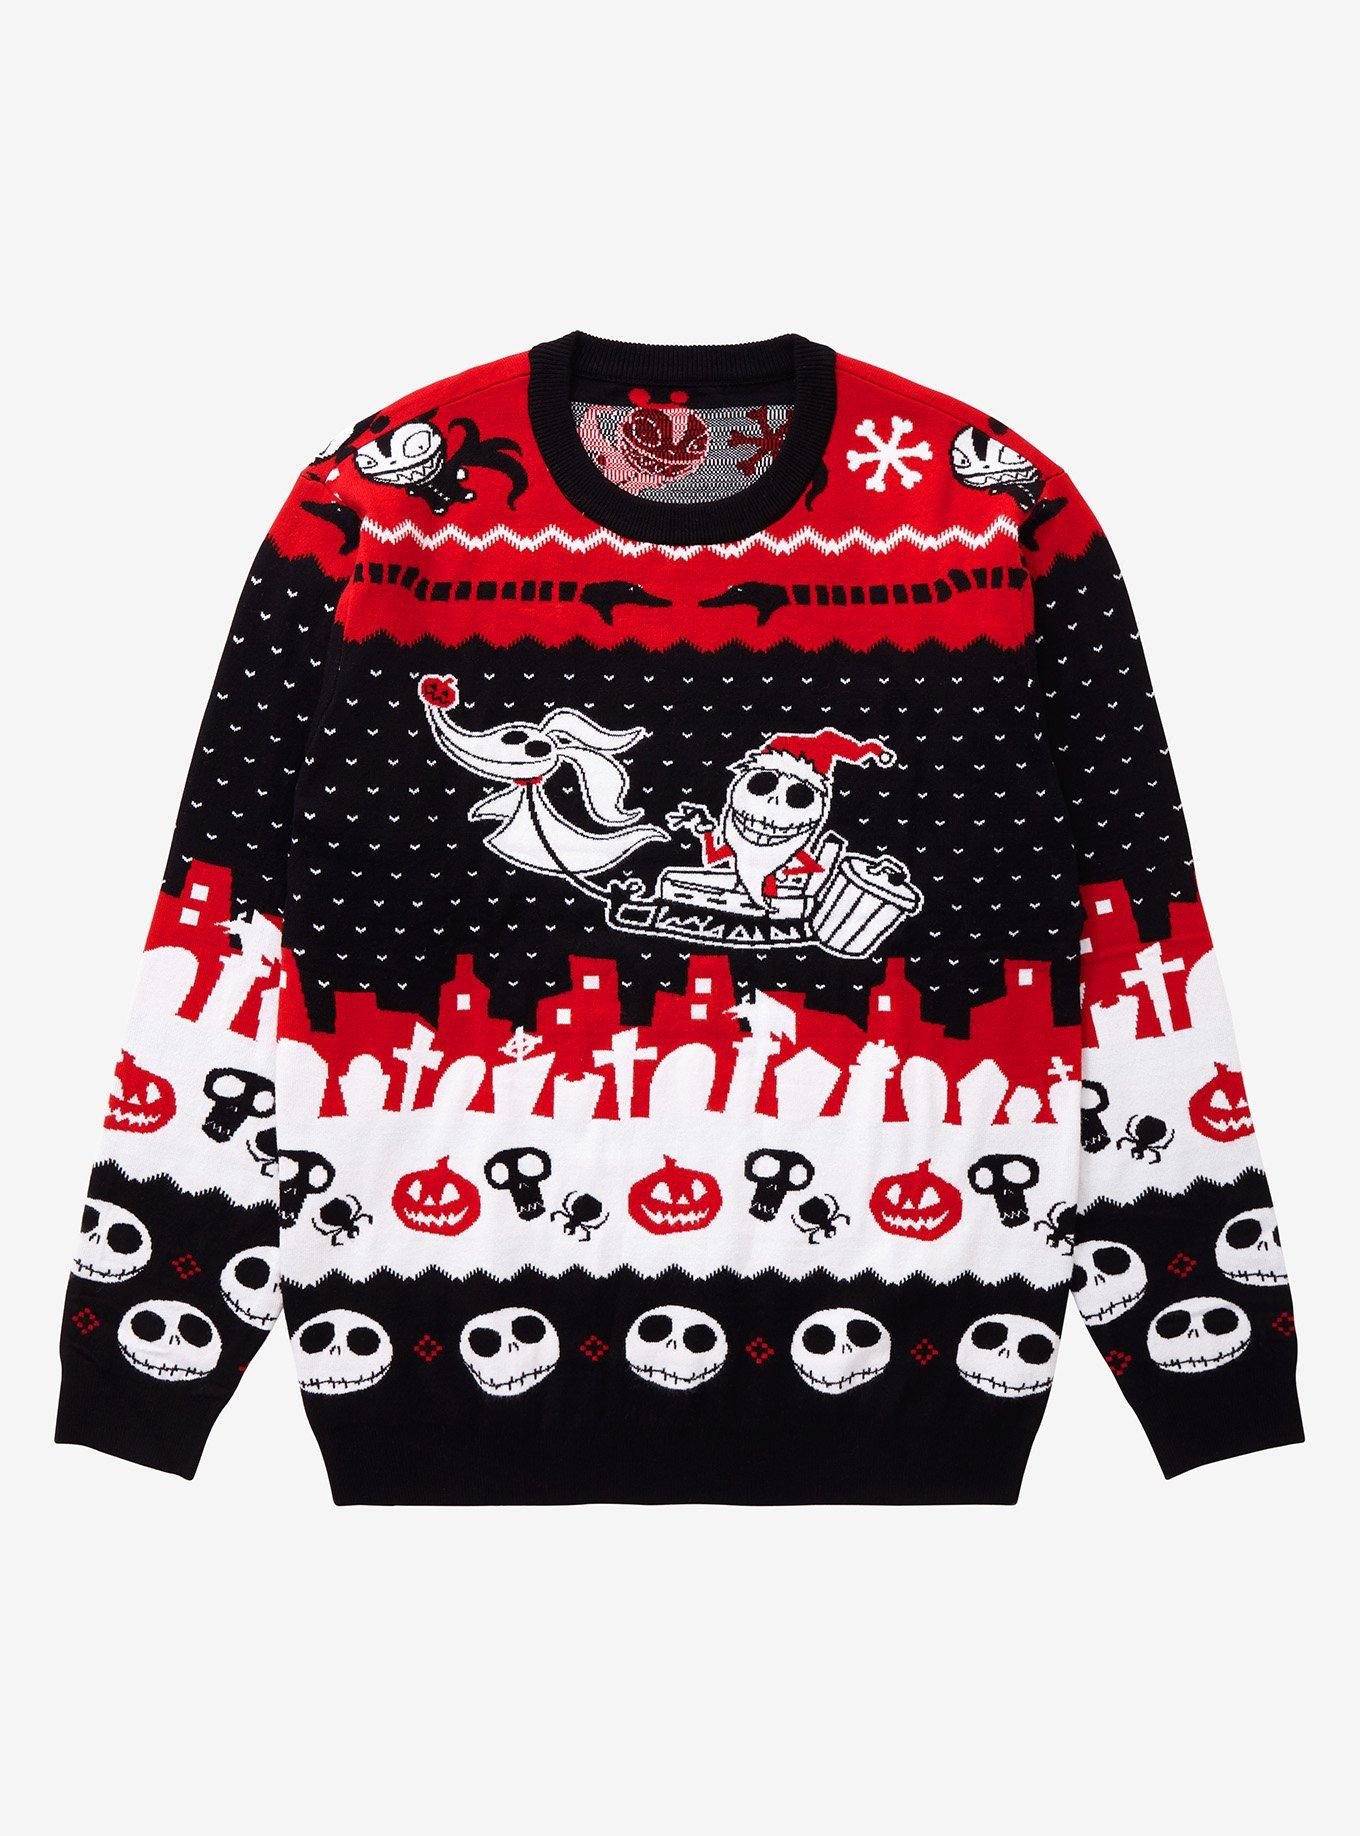 Official Santa Grinch and Jack Skellington Subway hallothanksmas shirt,  hoodie, sweater, long sleeve and tank top